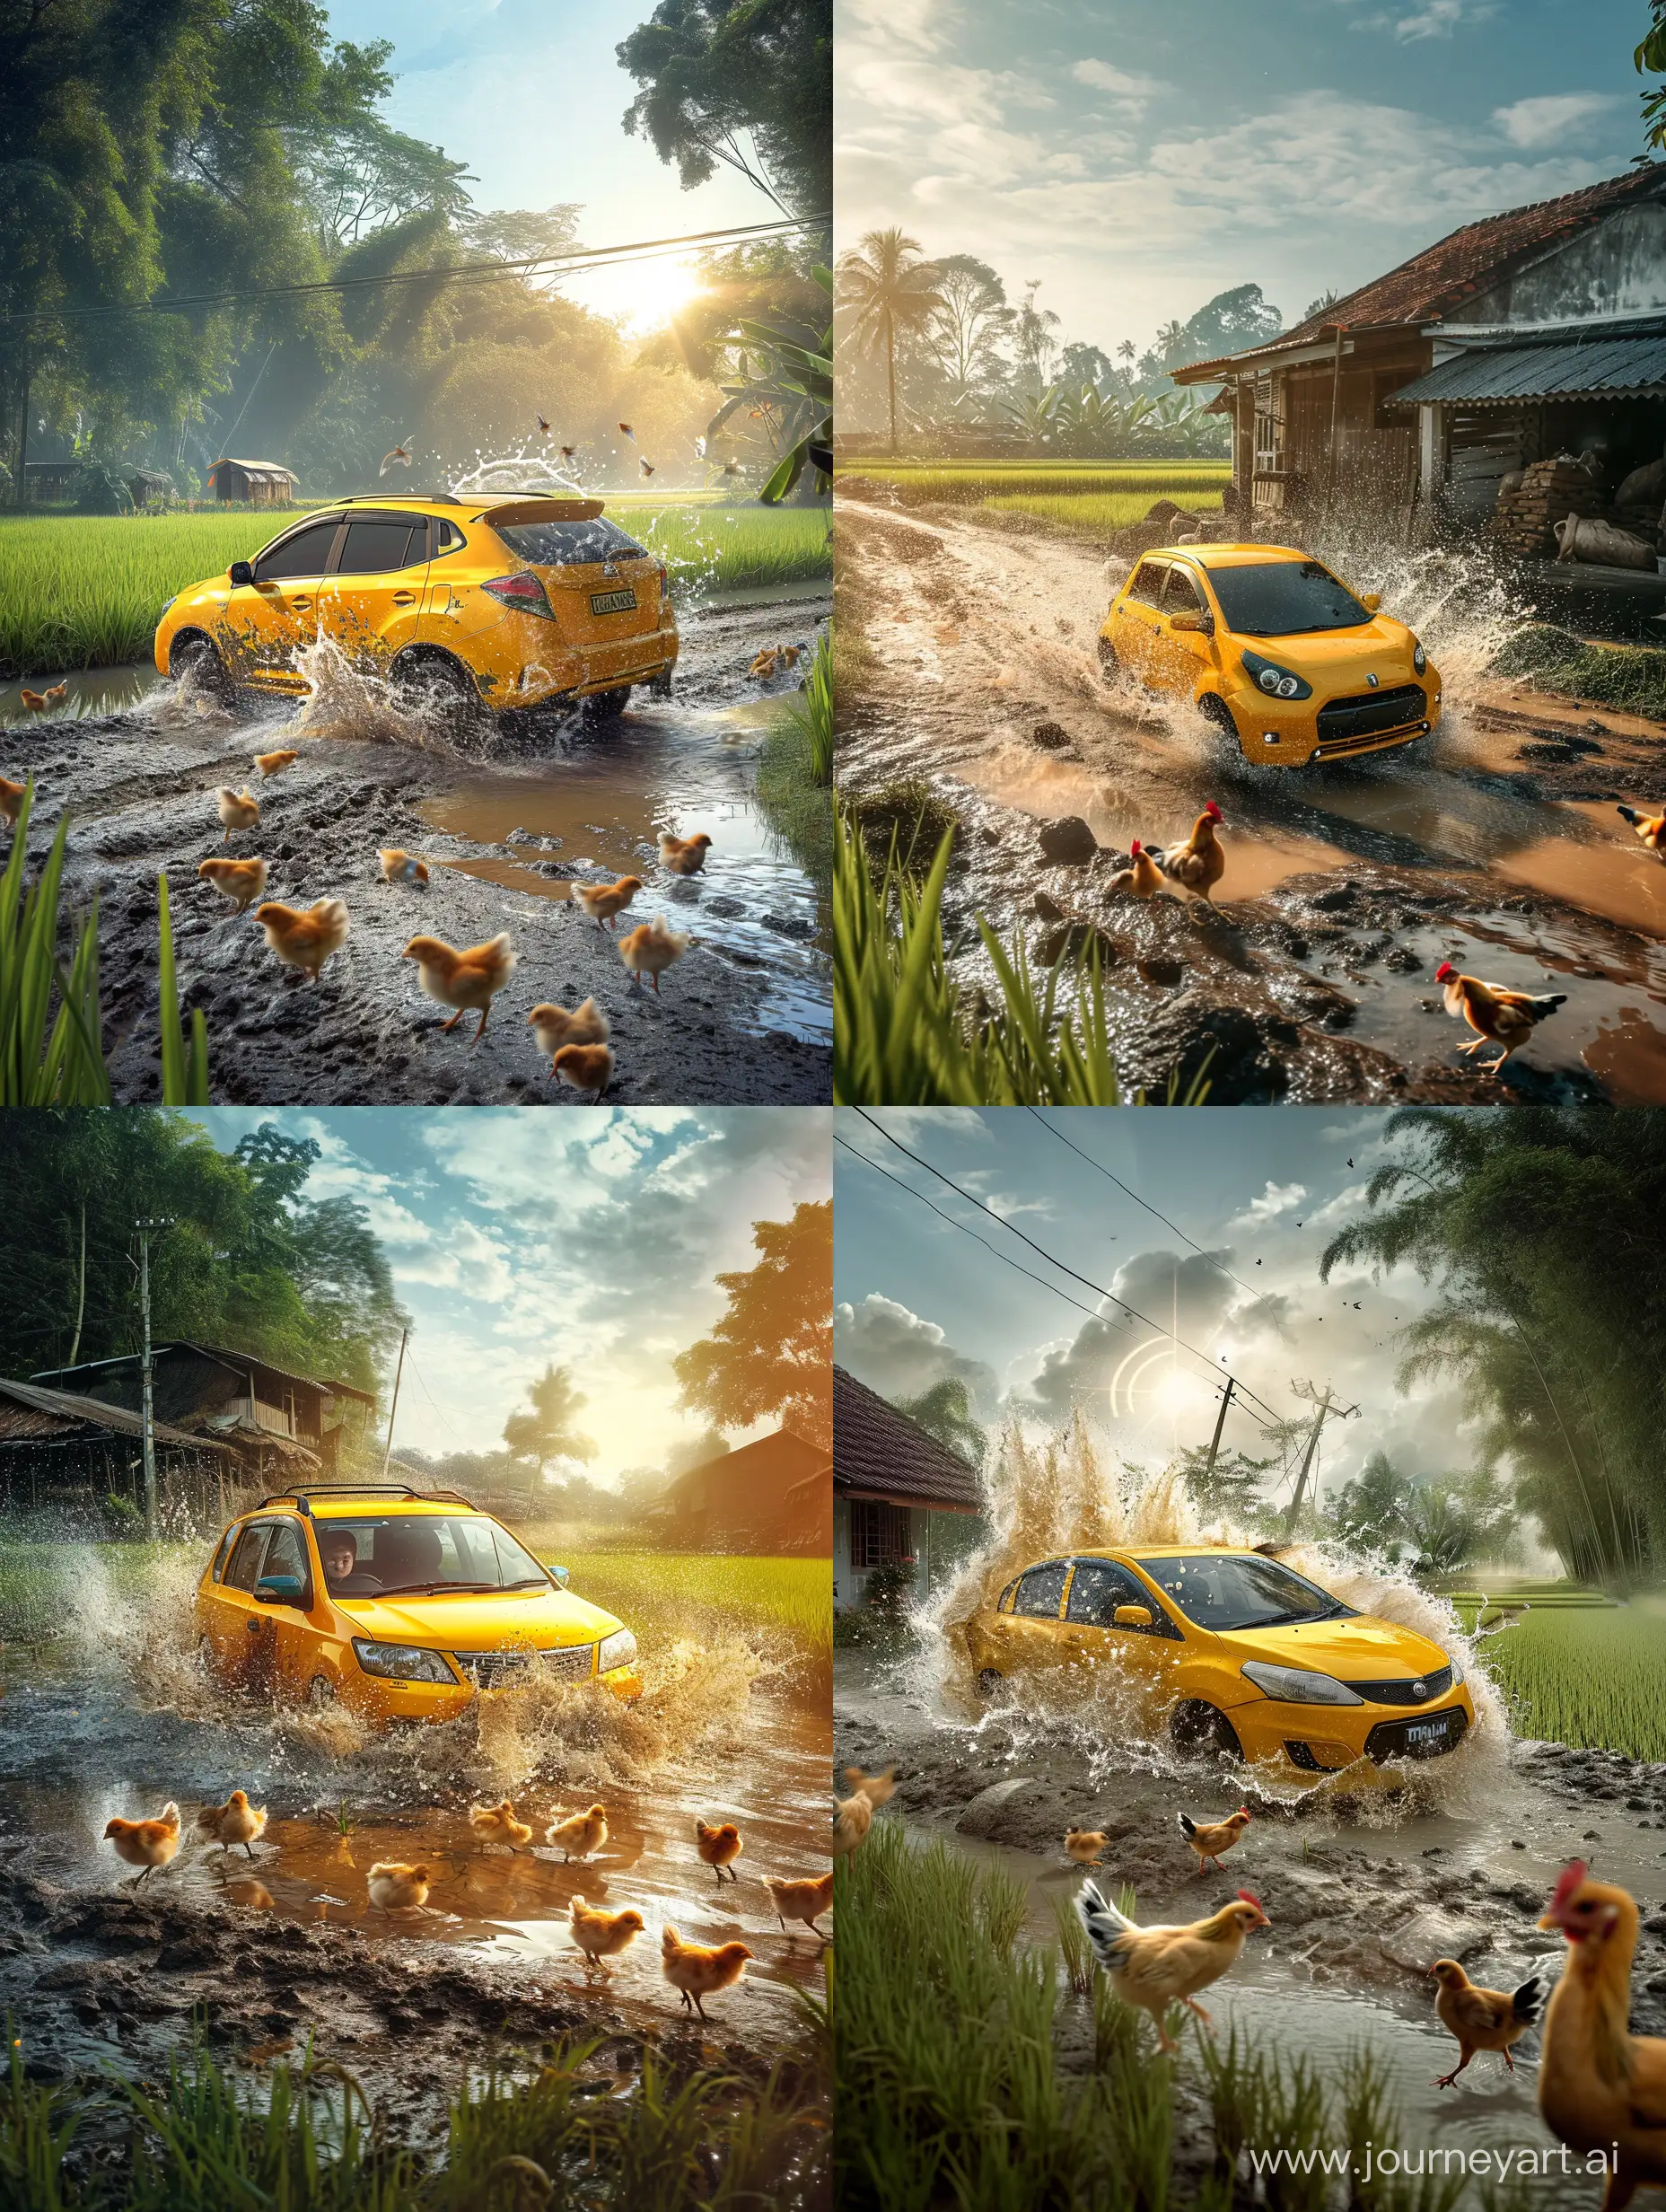 Scenic-Morning-Drive-Yellow-Myvi-Car-Splashing-Through-Village-by-the-Rice-Field